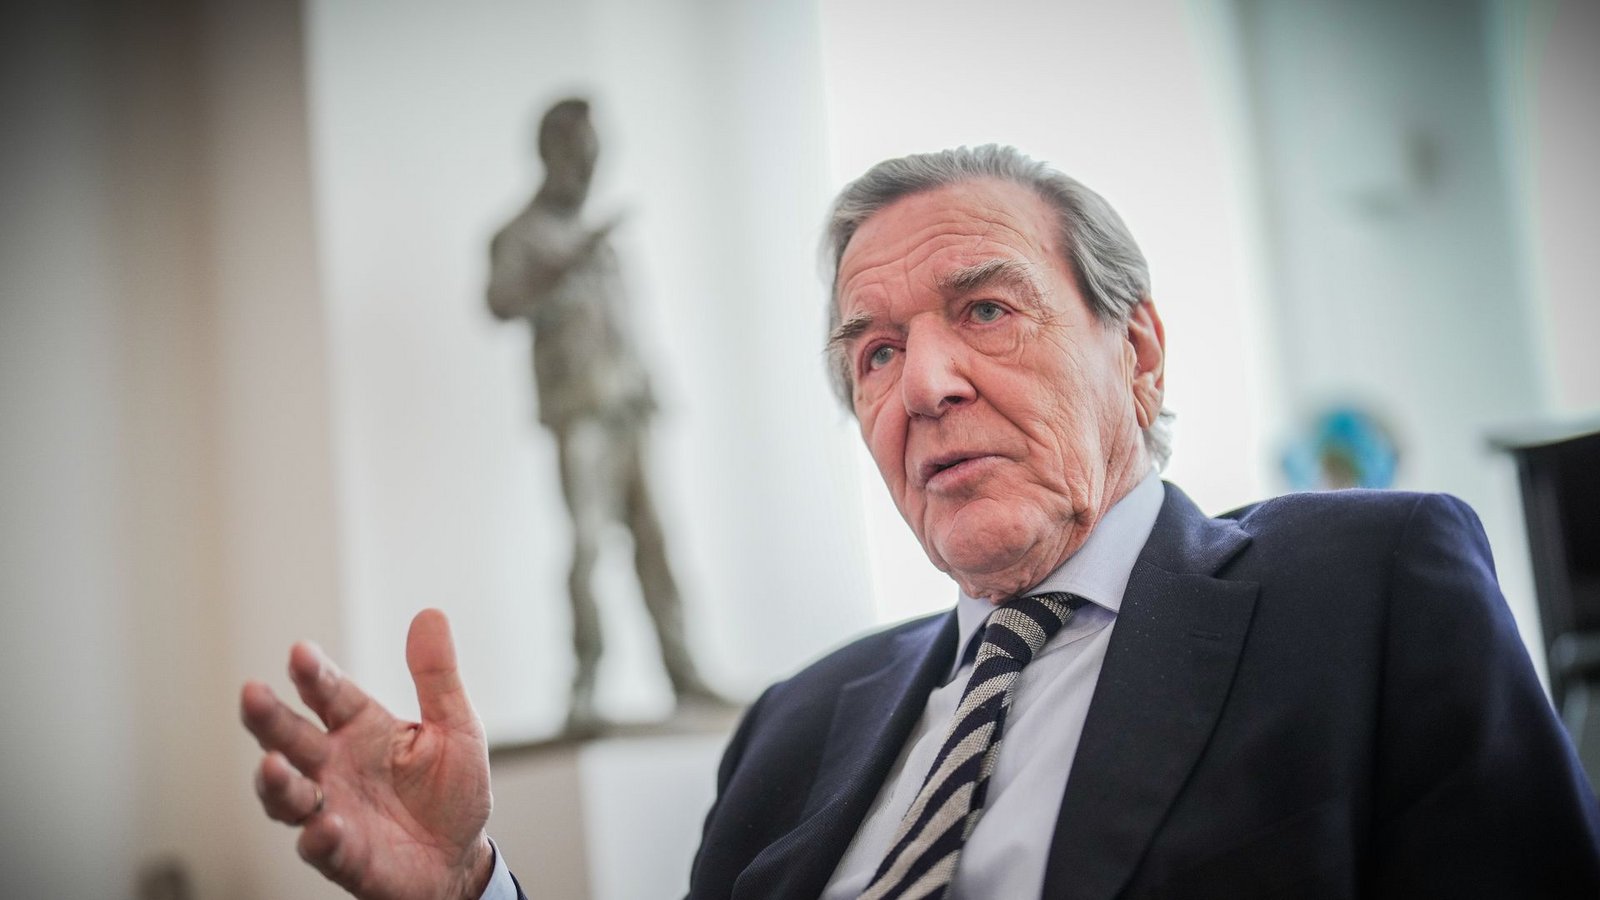 Der ehemalige Bundeskanzler Gerhard Schröder ist Anfang des Monats 80 Jahre alt geworden.Foto: Michael Kappeler/dpa